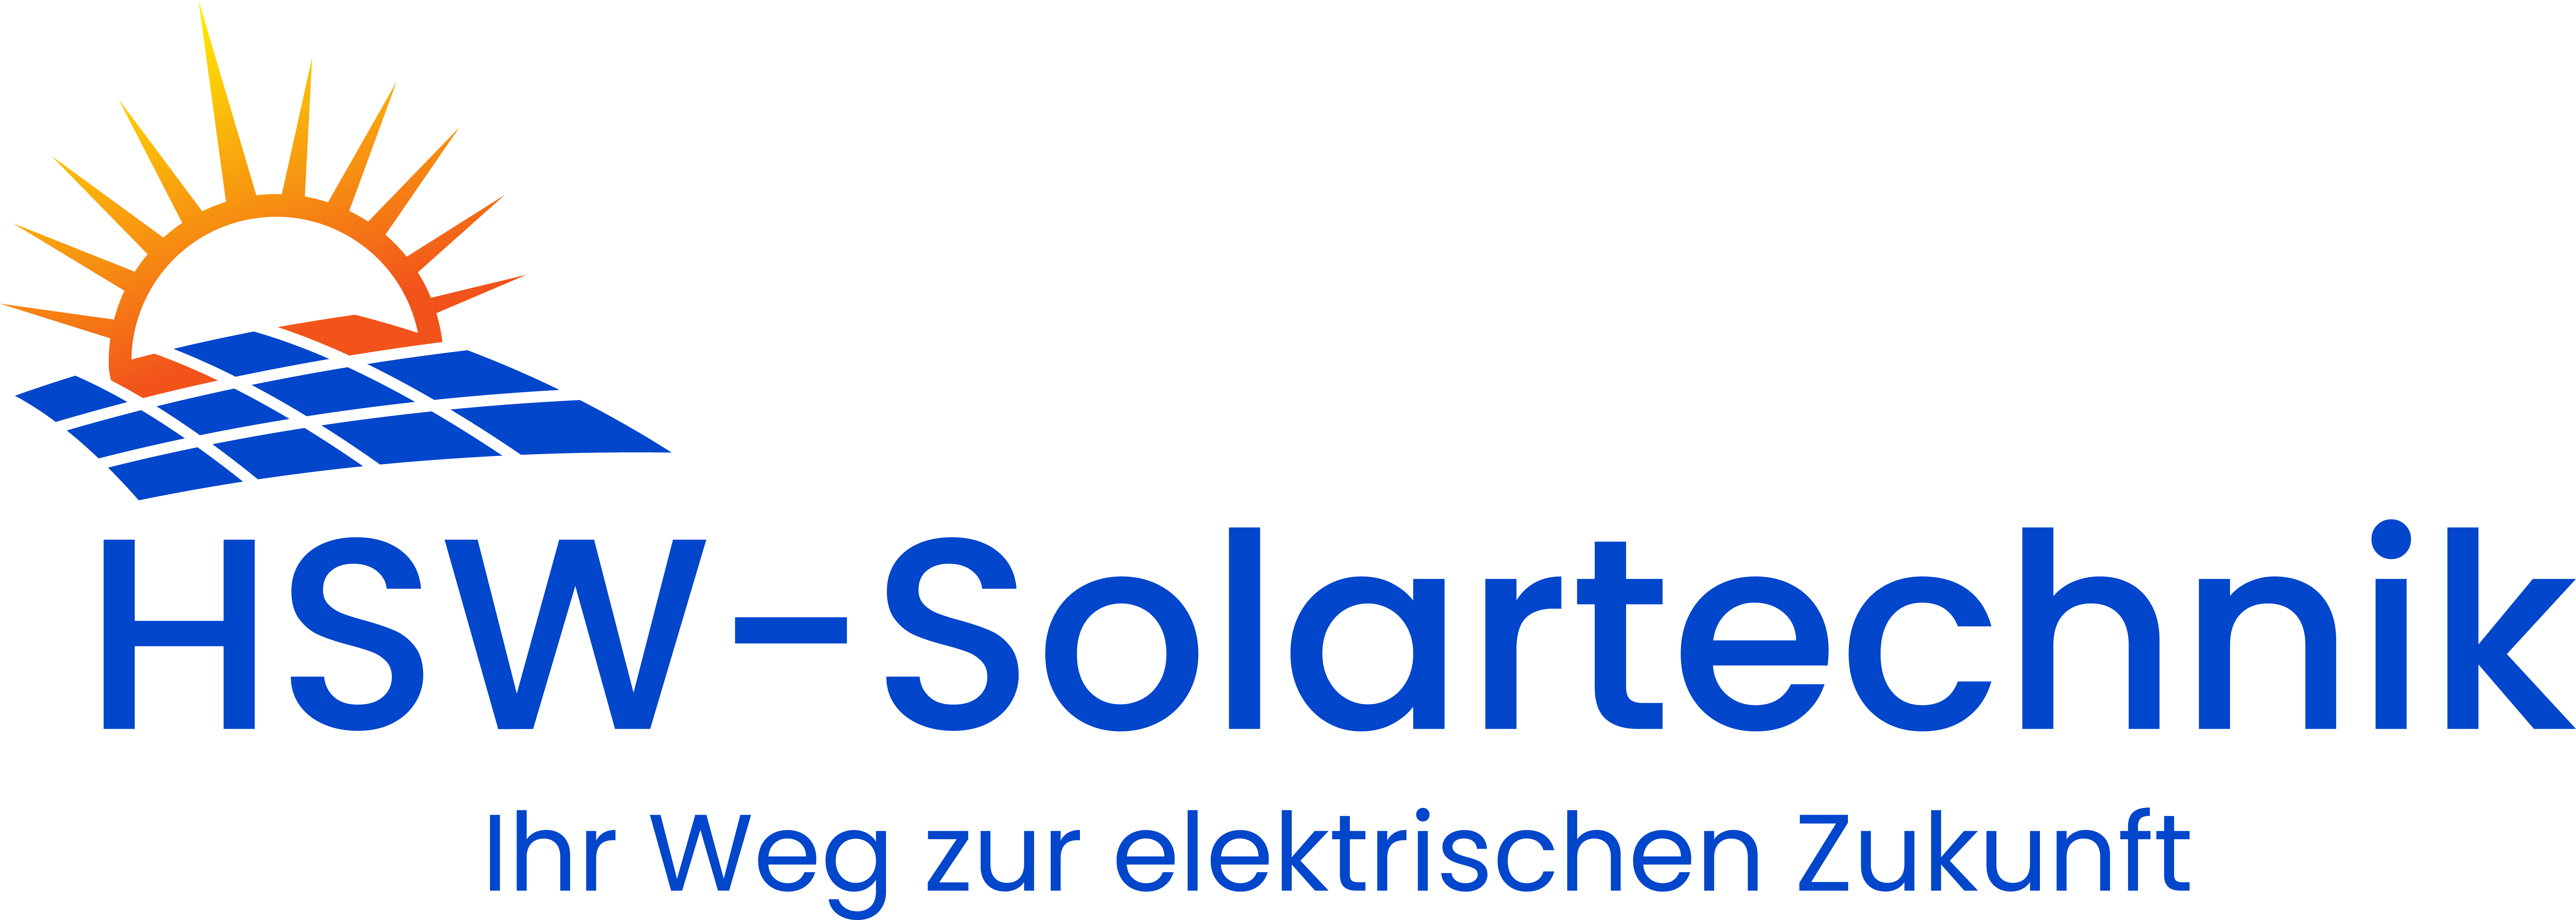 HSW-Solartechnik